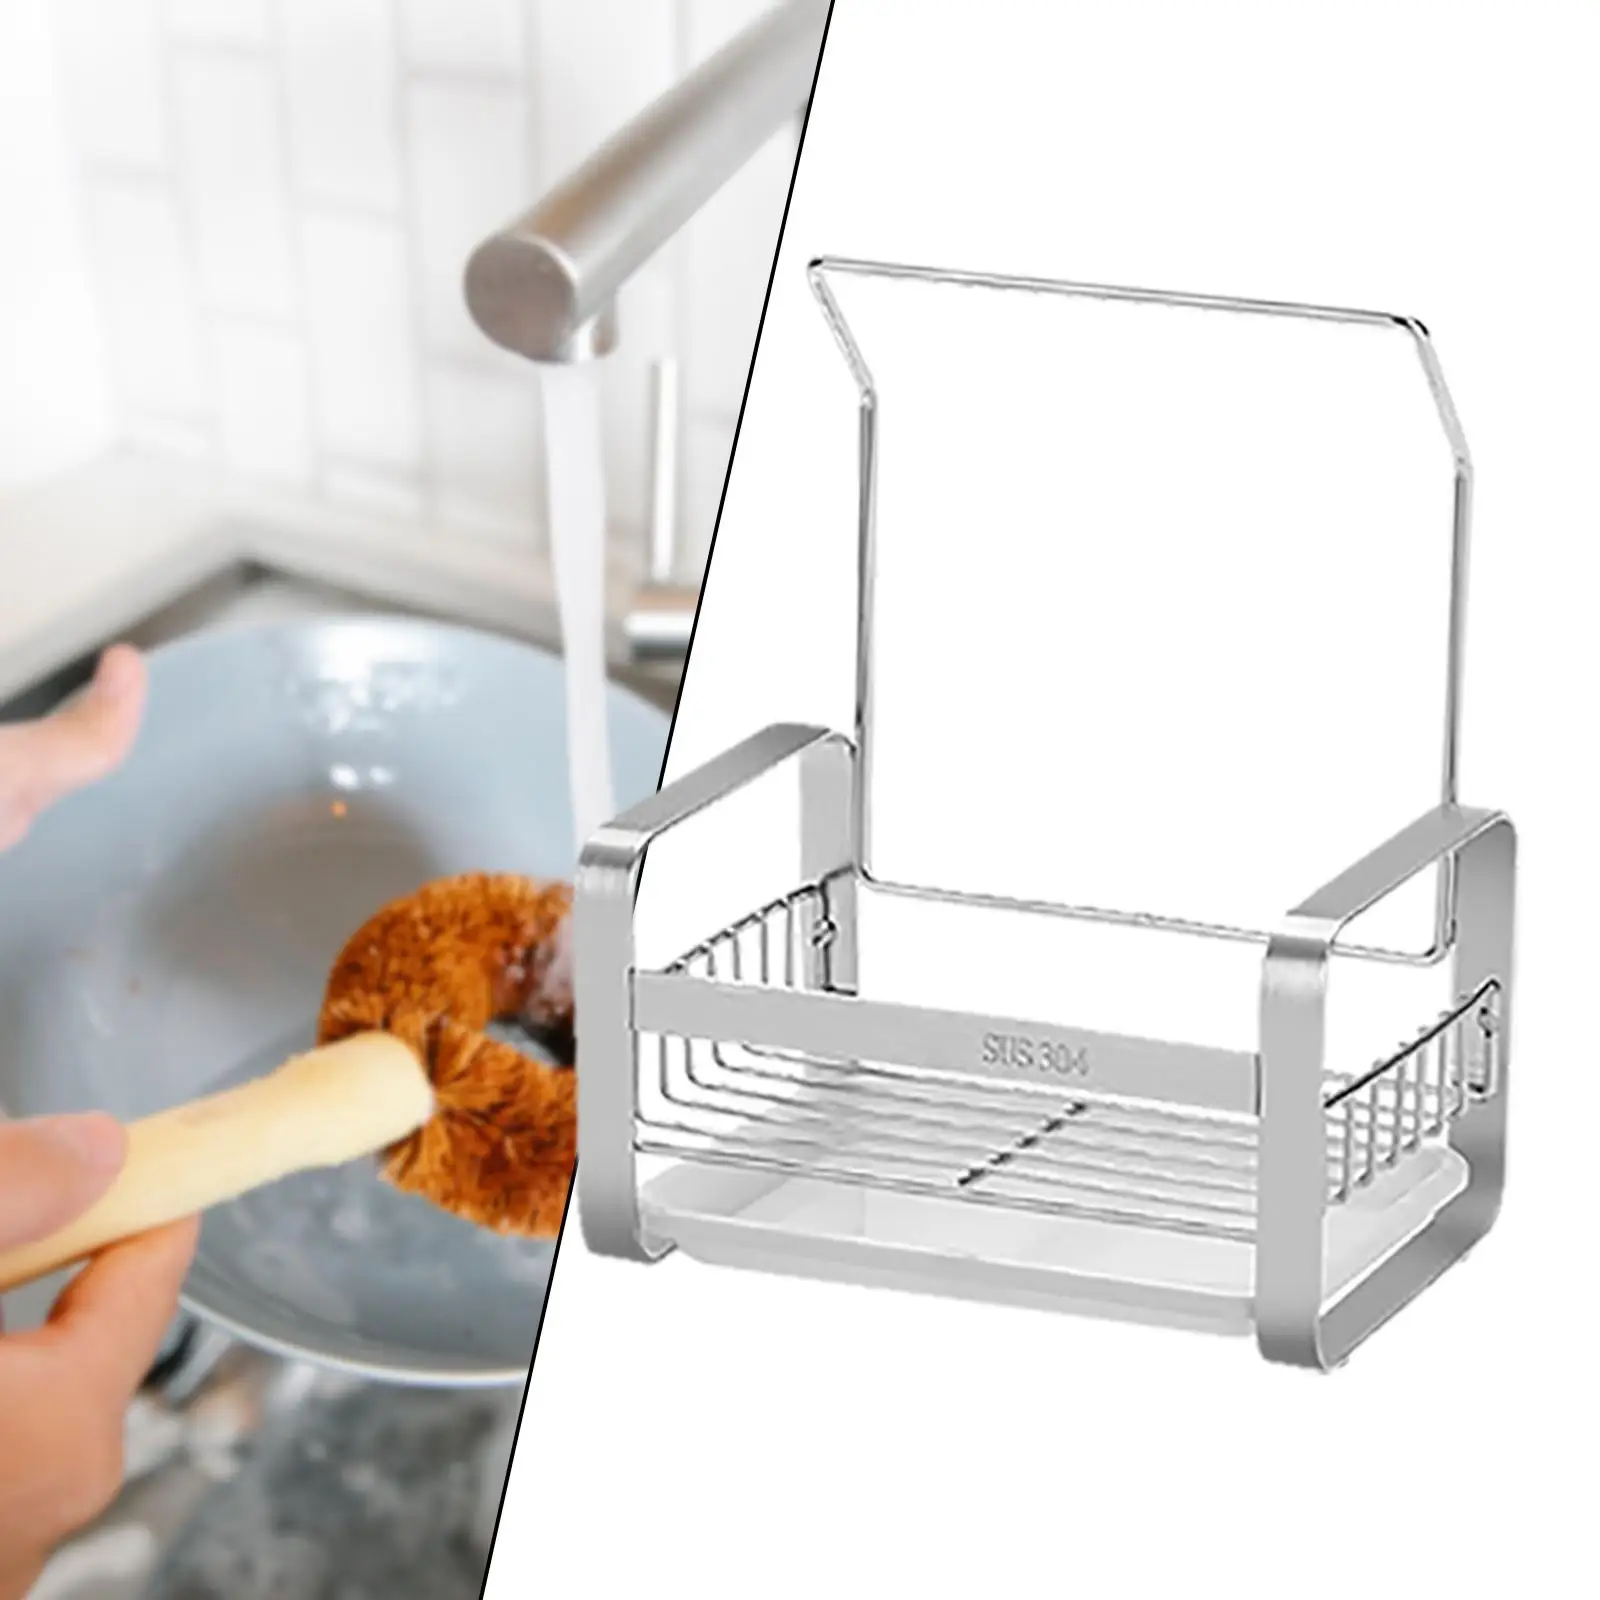 Sink Caddy Sponge Holder with Drain Tray Dishcloth Holder Anti Slip Organiser Storage Bracket Drying Rack for Brush Kitchen Soap